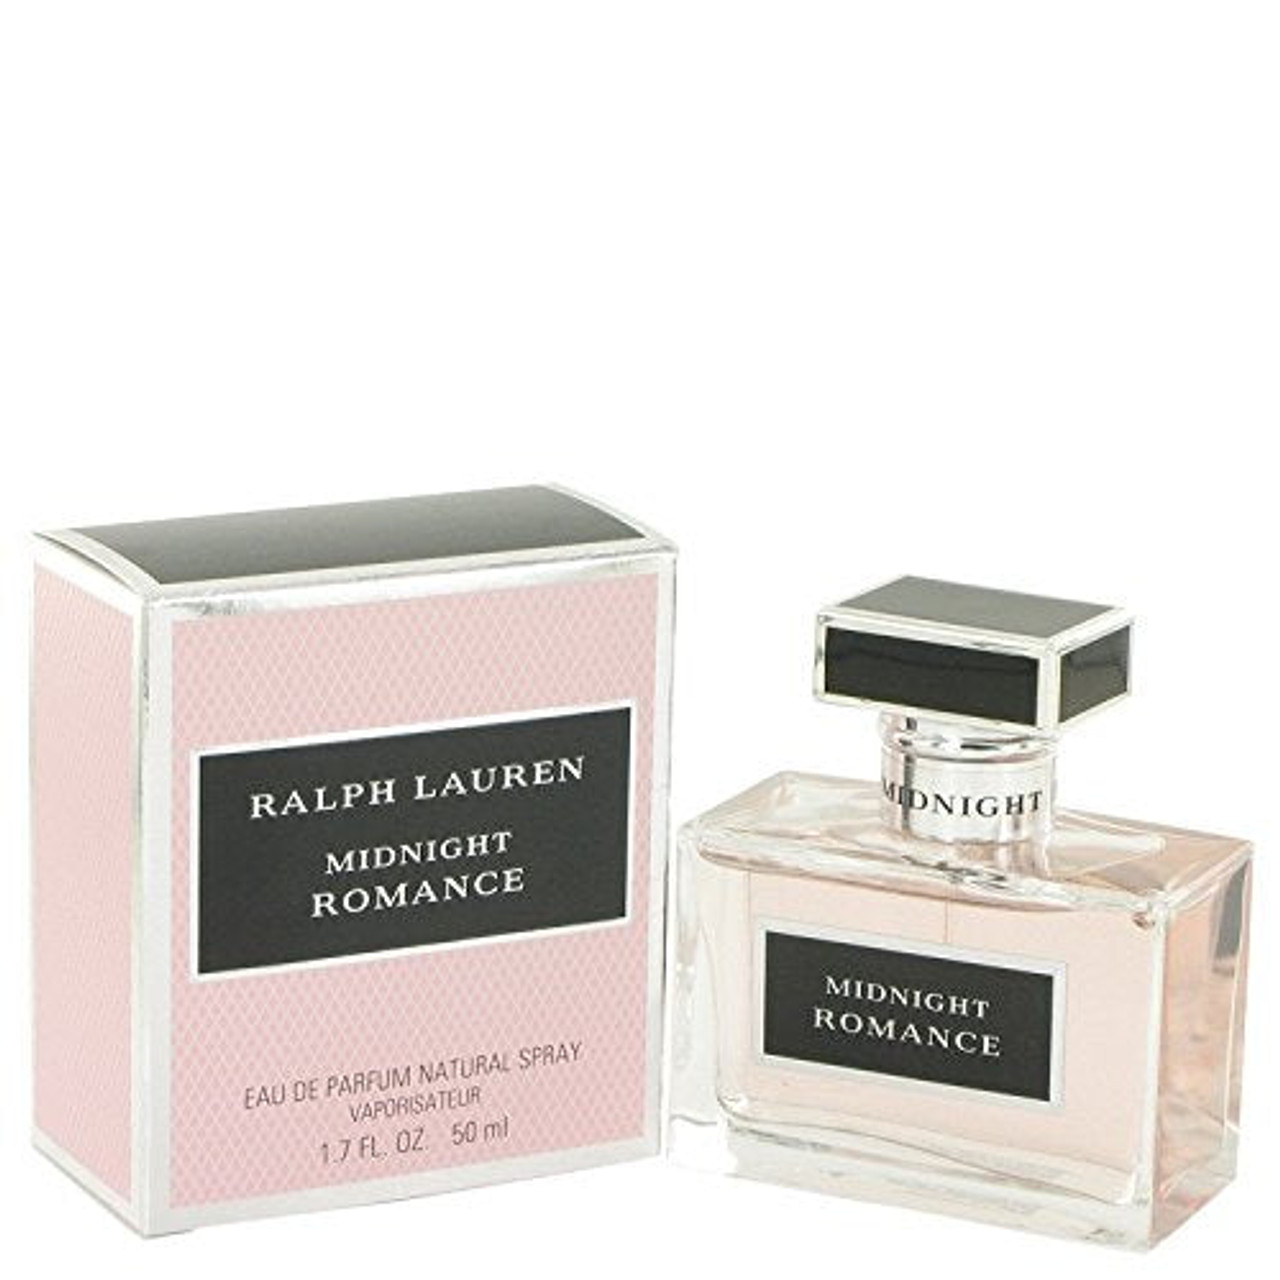 Ralph Lauren Romance Eau de Parfum 50ml (1.7fl oz)